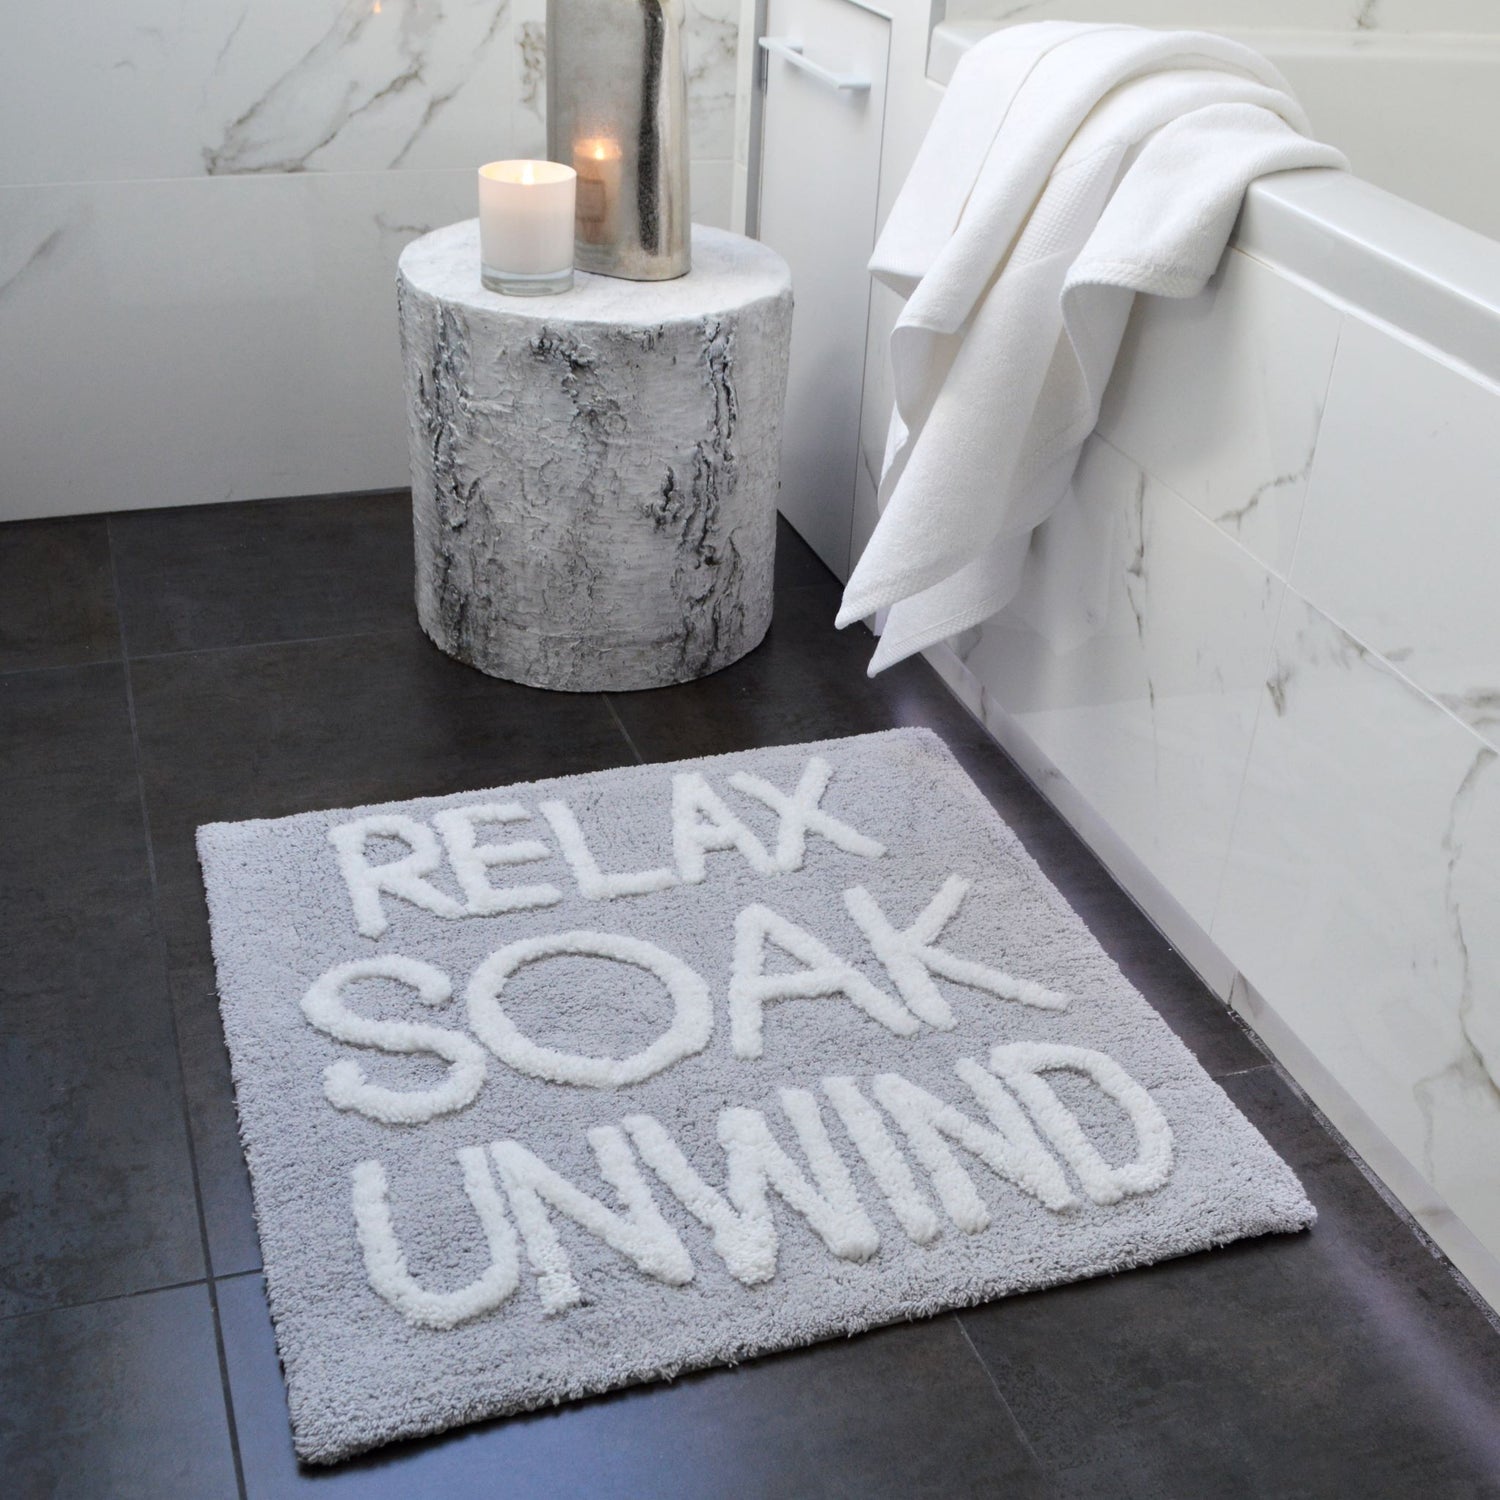 Relax Soak Unwind Tufted Square Bath Mat